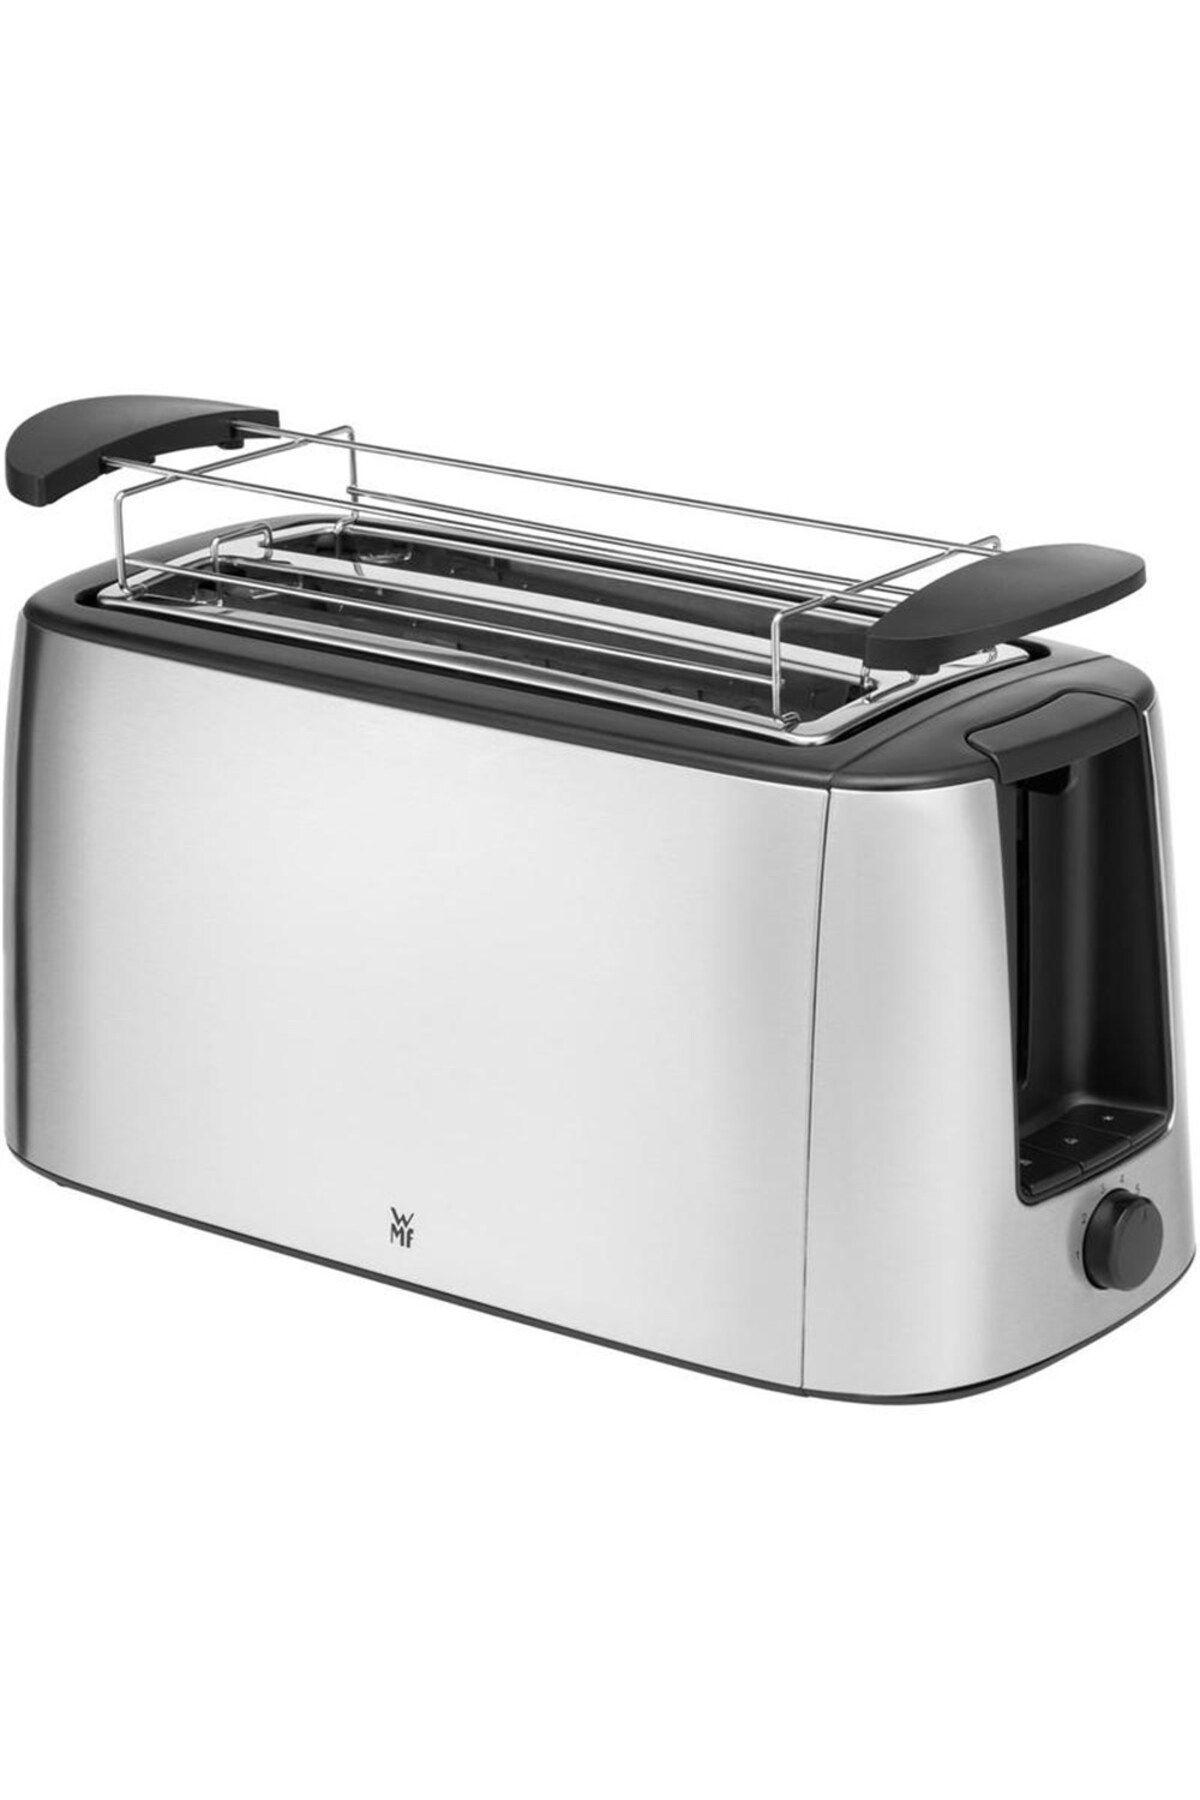 Wmf Bueno Pro Double Ekmek Kızartma Makinesi